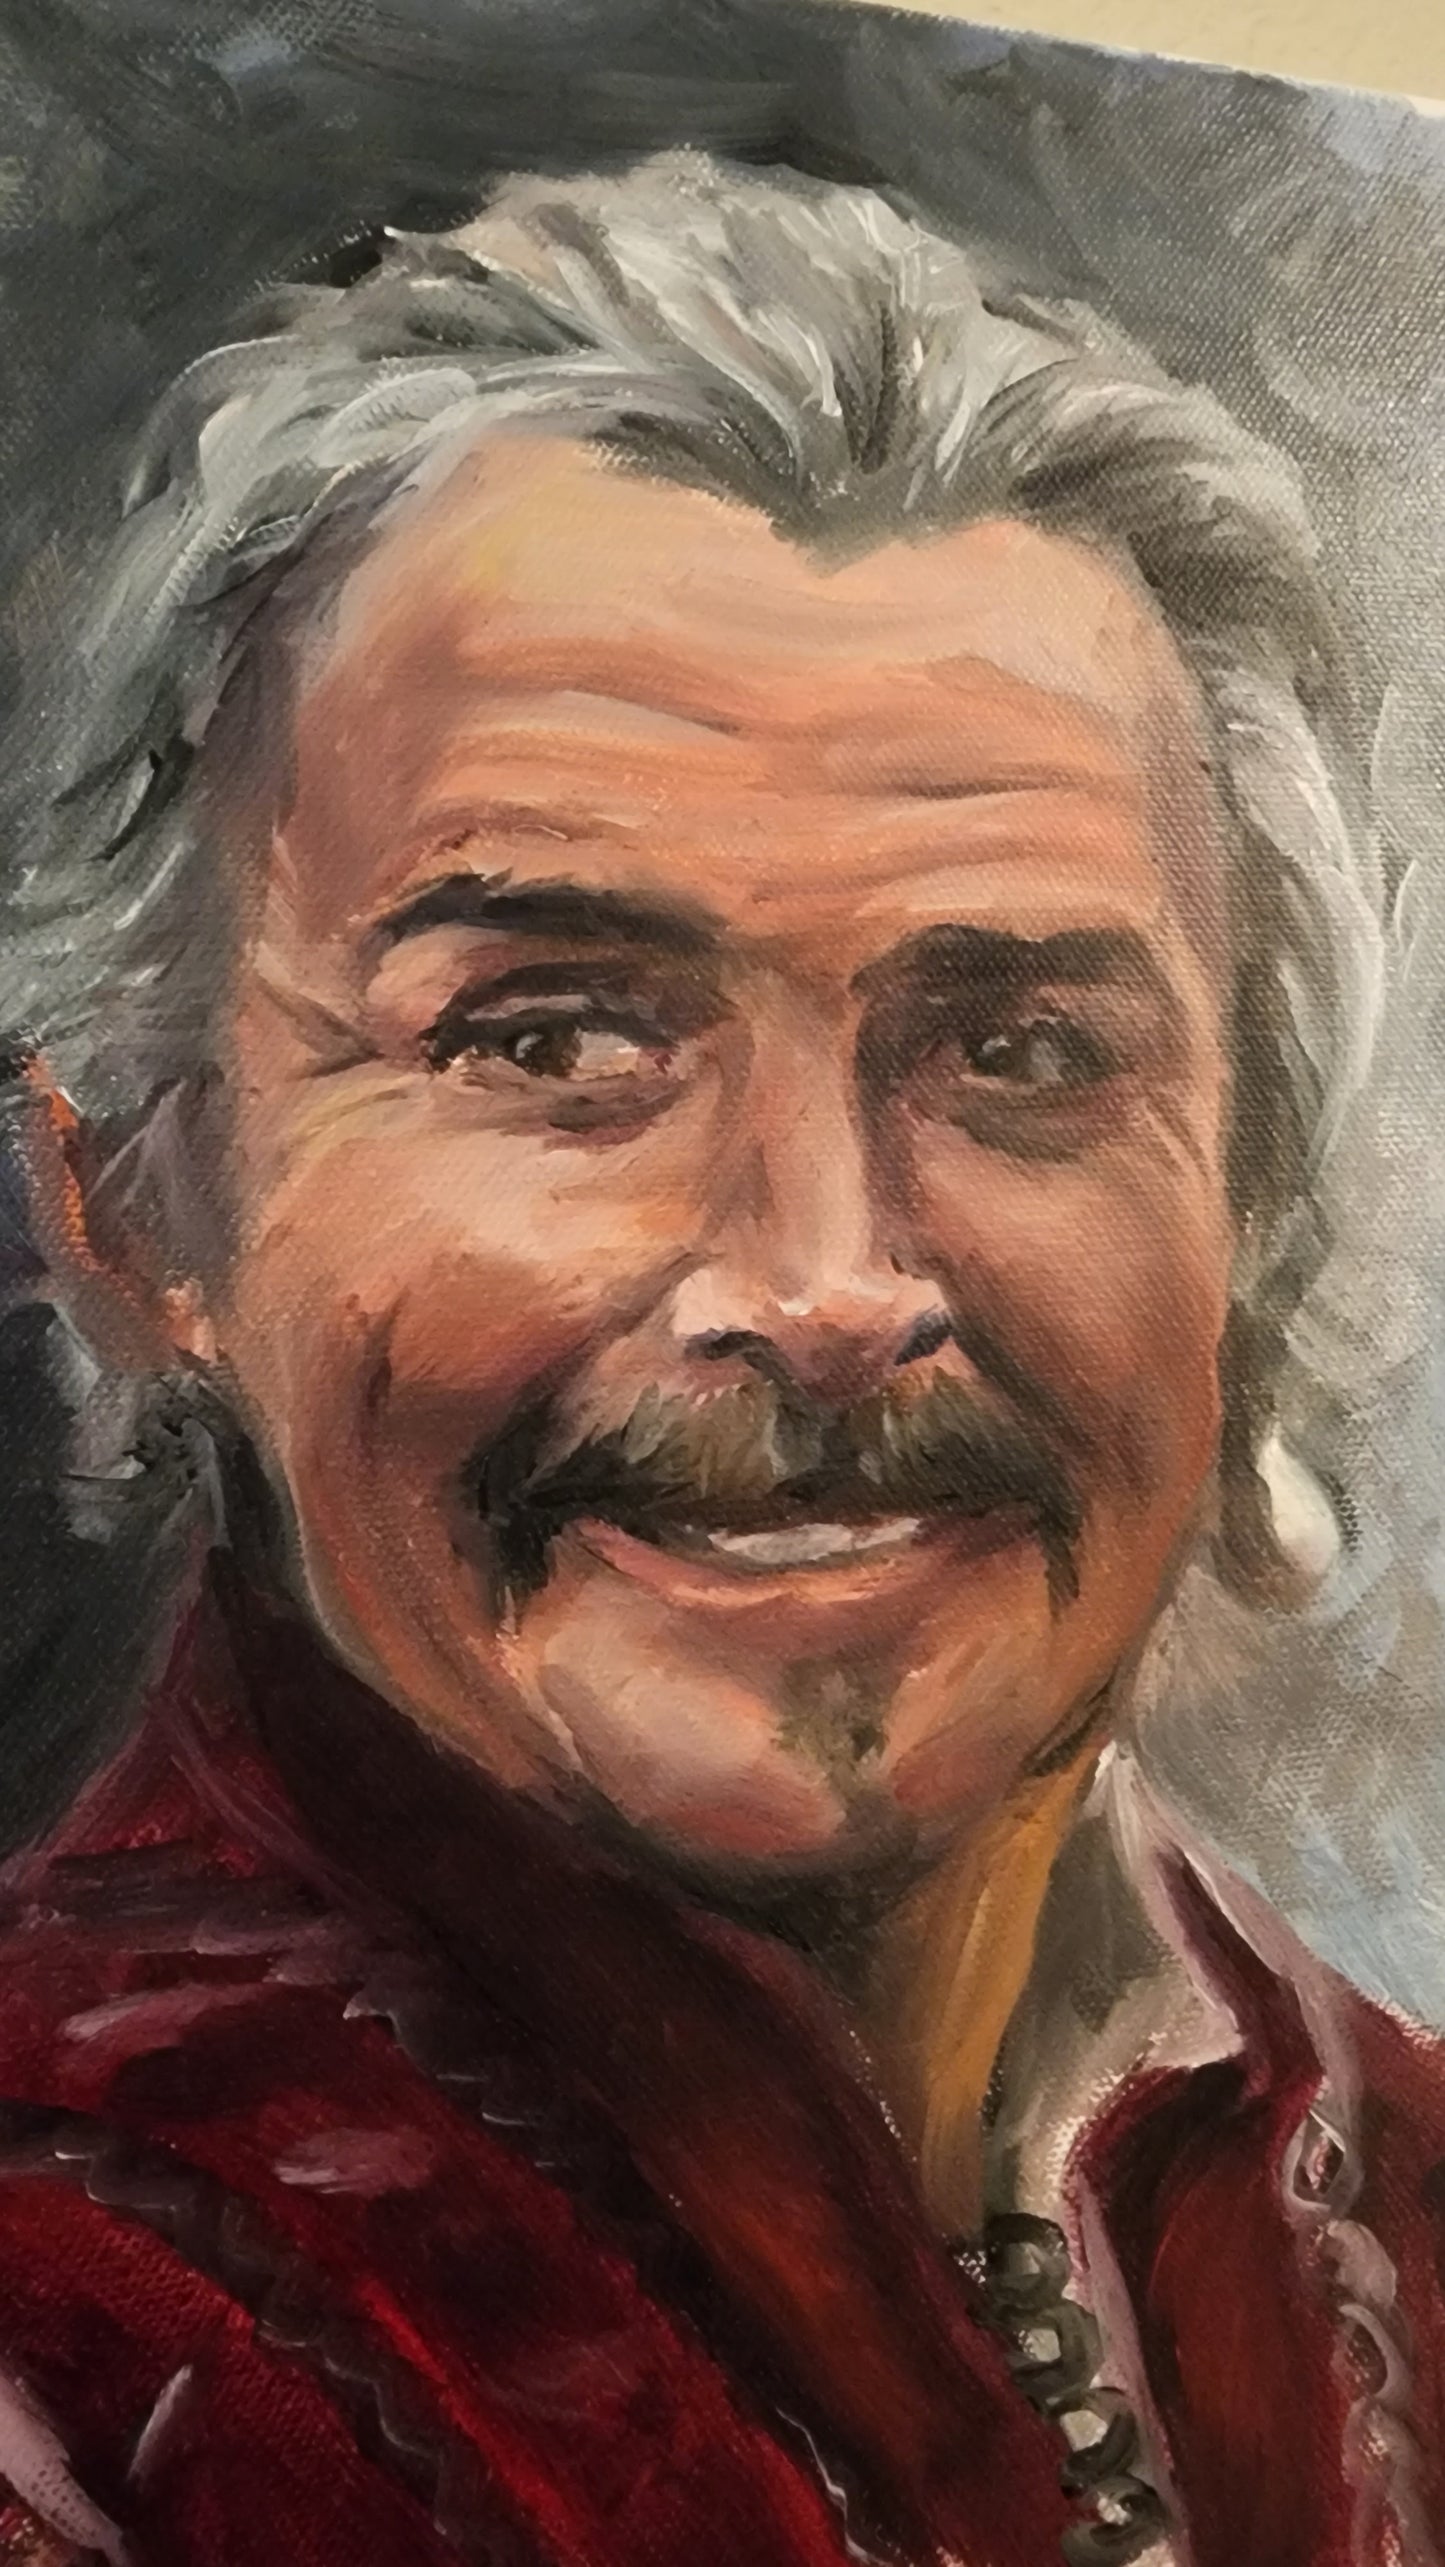 Sean Connery "Highlander" Portrait